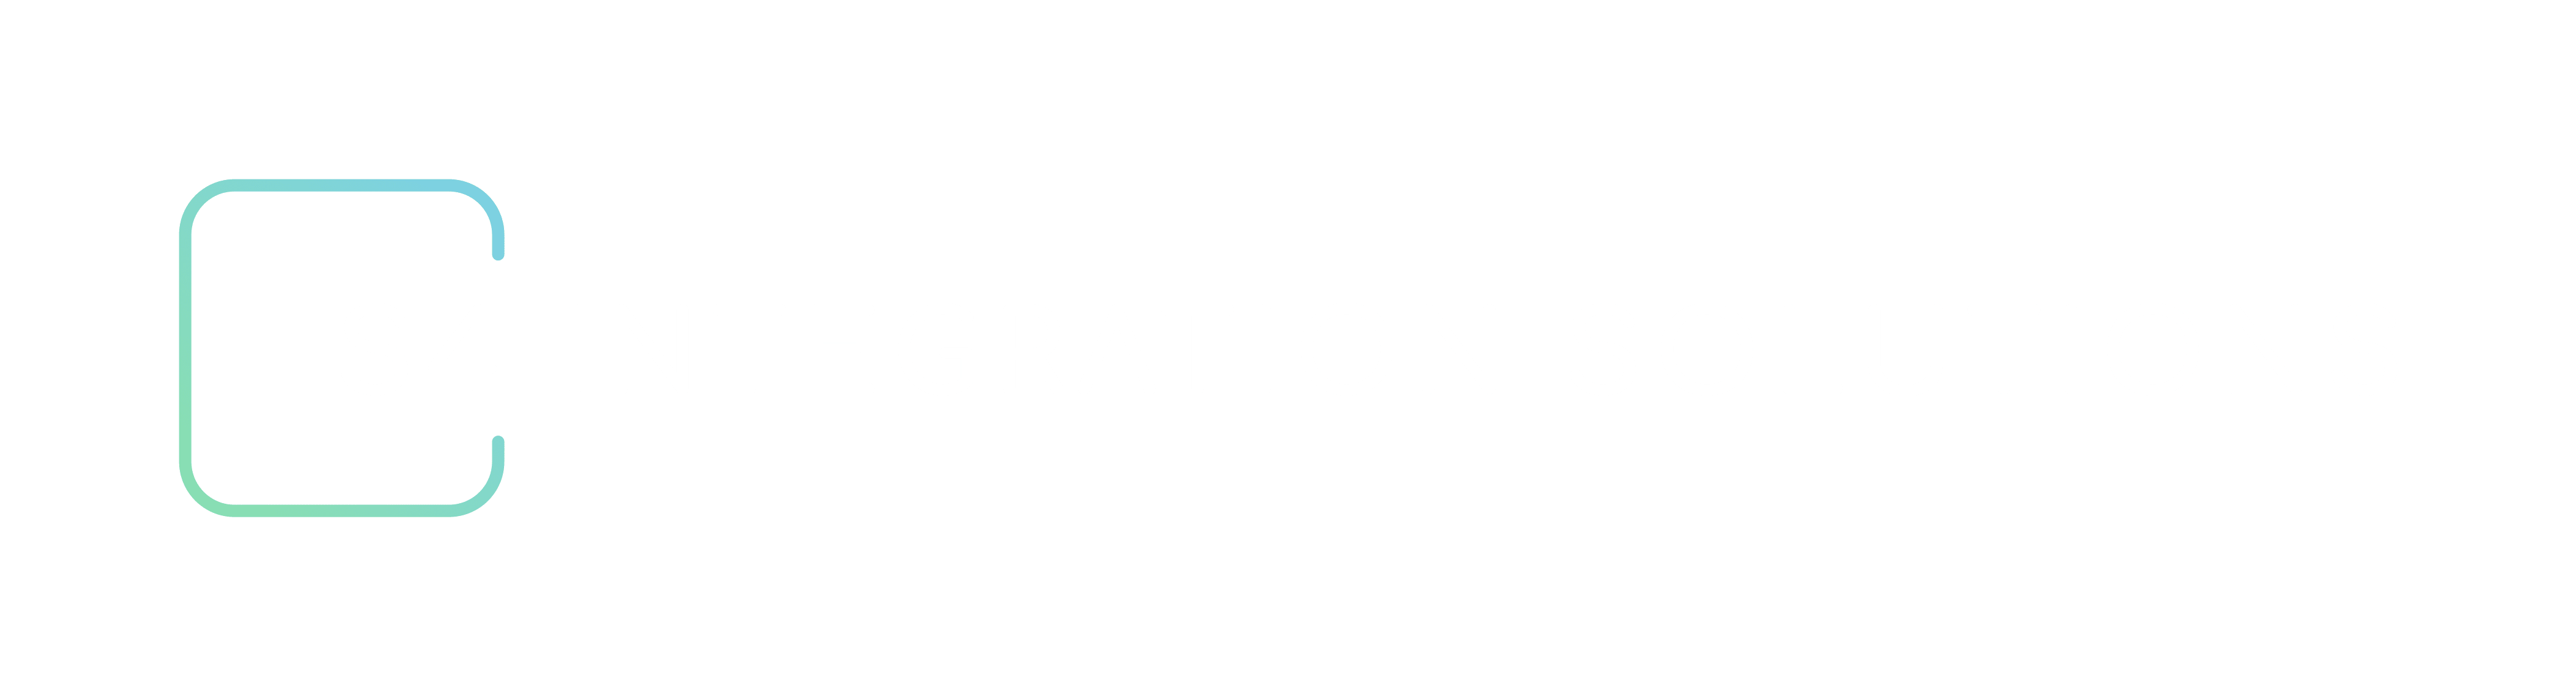 S4 Integration Solutions